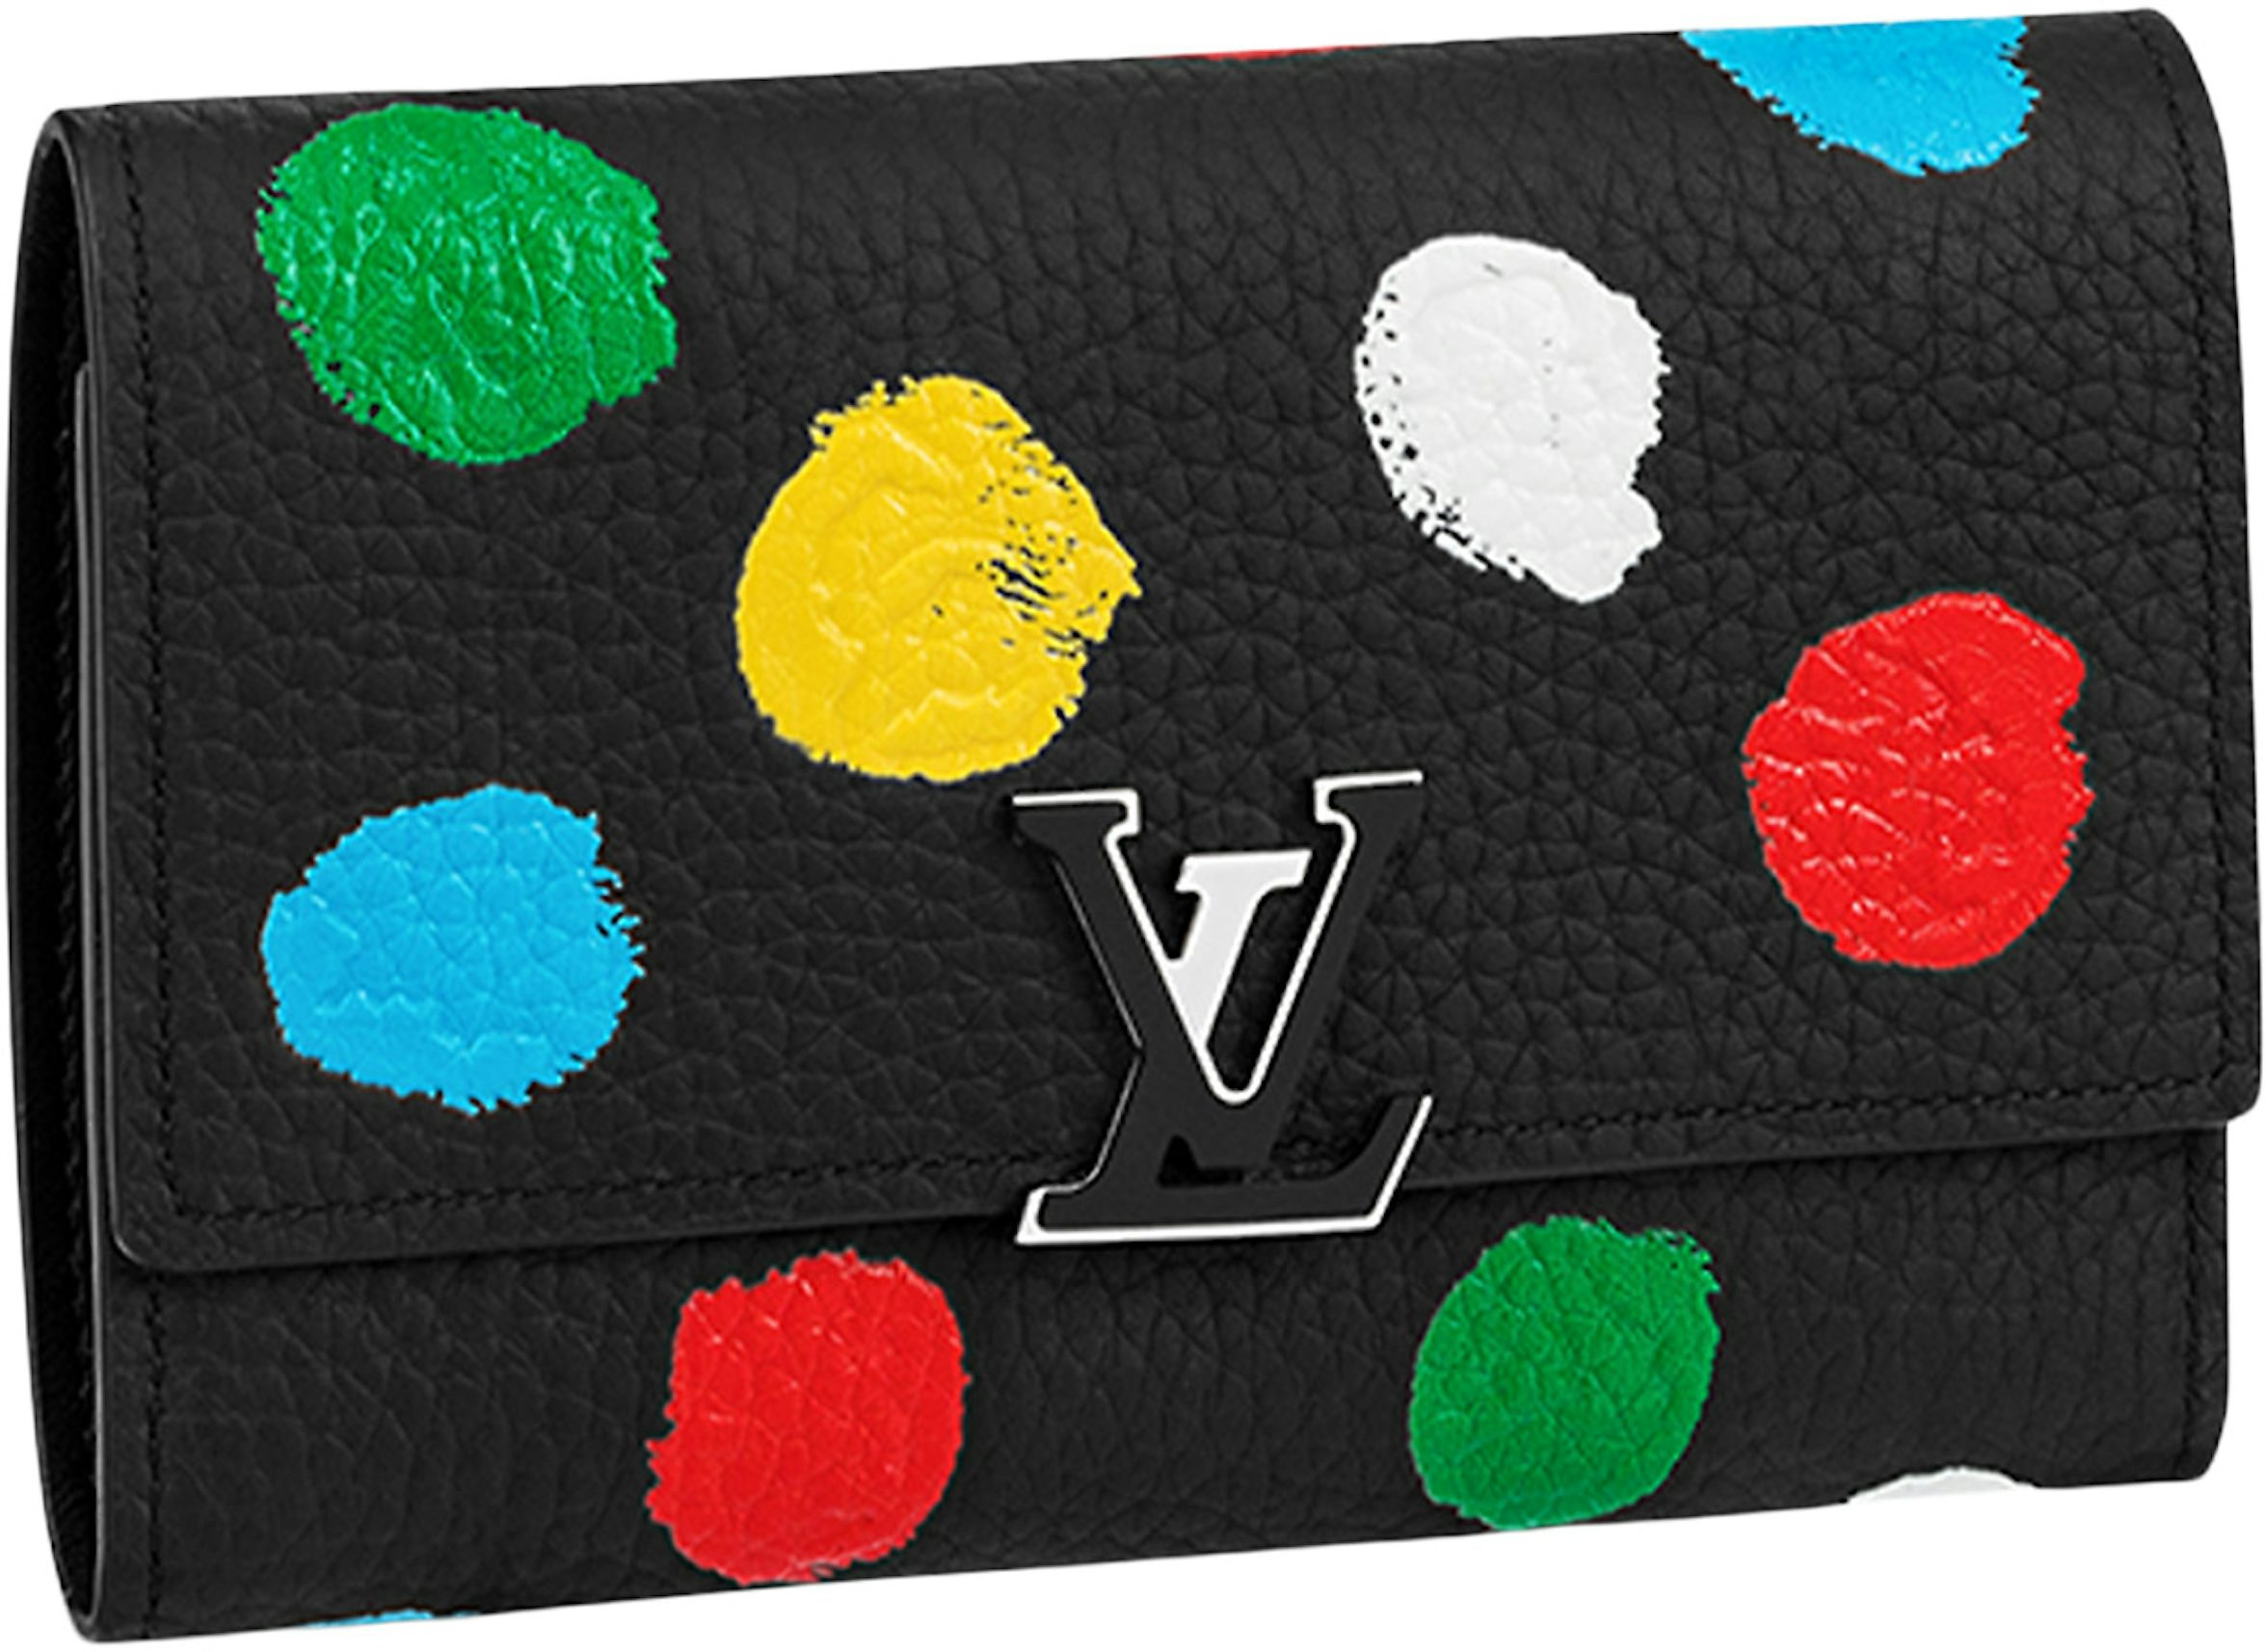 Louis Vuitton Compact Wallet Flower Lock Monogram Noir Black in